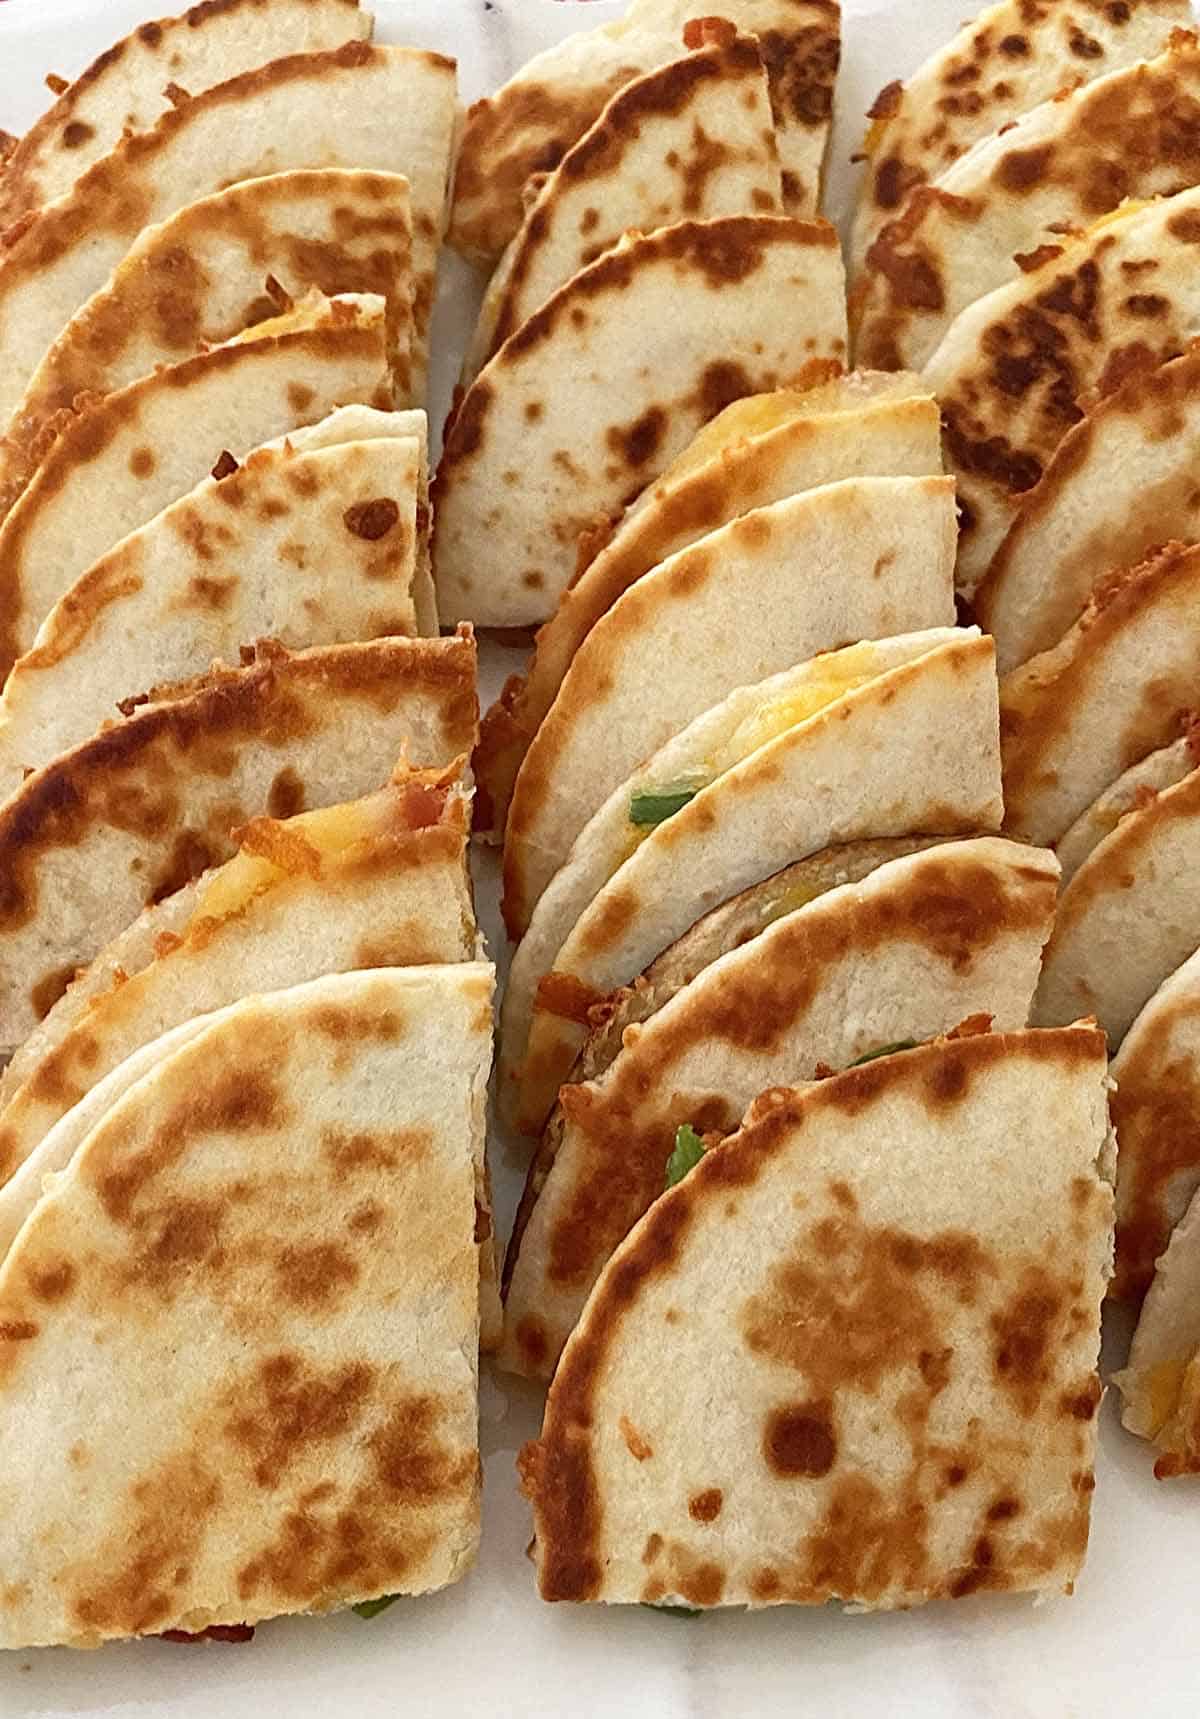 Two dozen quartered mini quesadillas arranged on a serving platter to serve as appetizers.